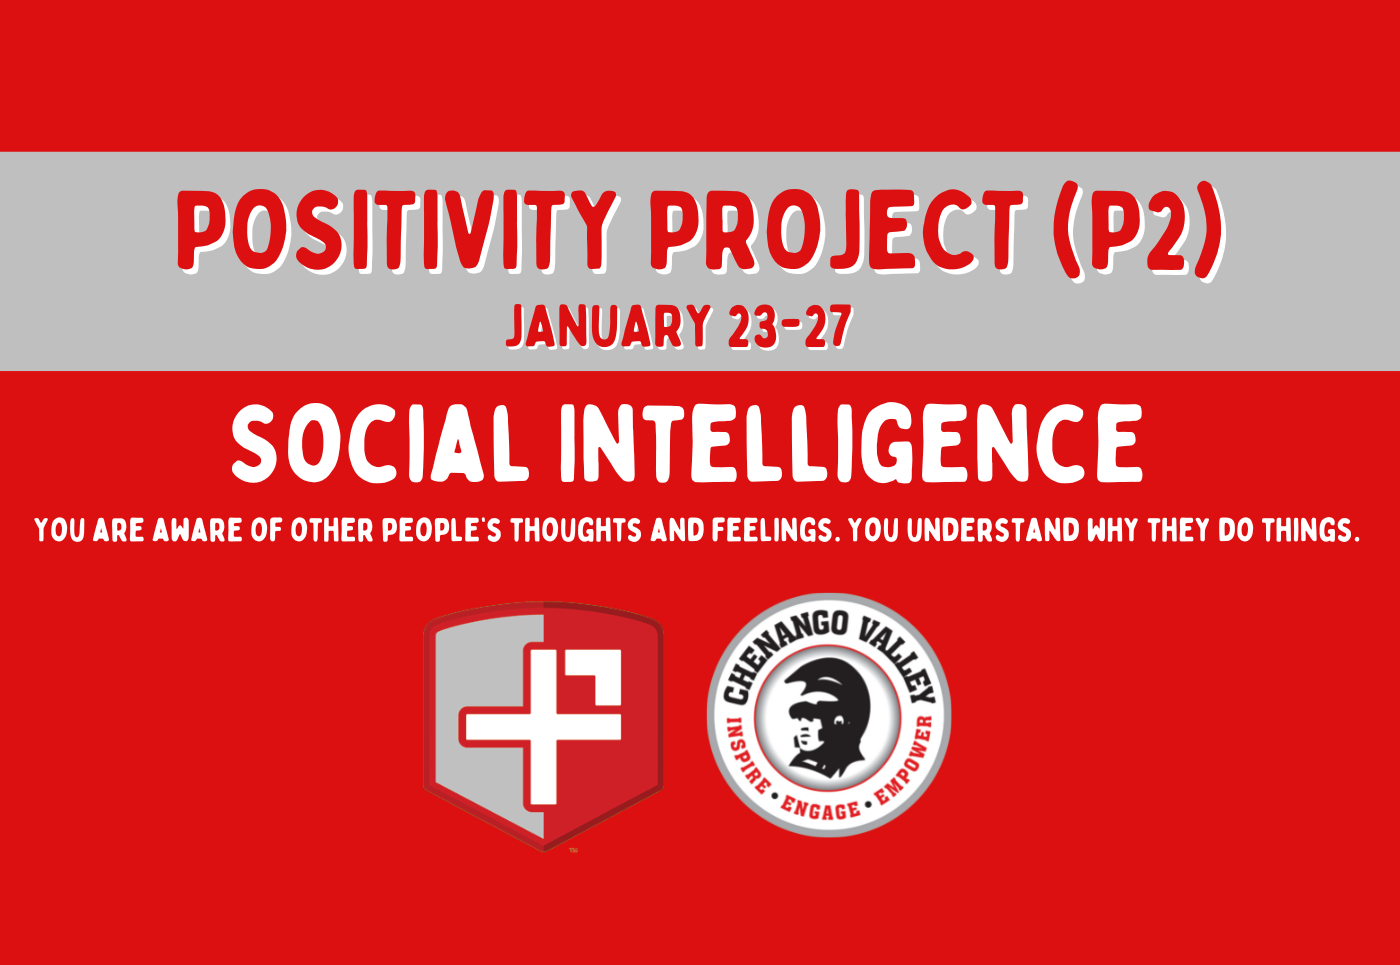 p 2 character strength - social intelligence